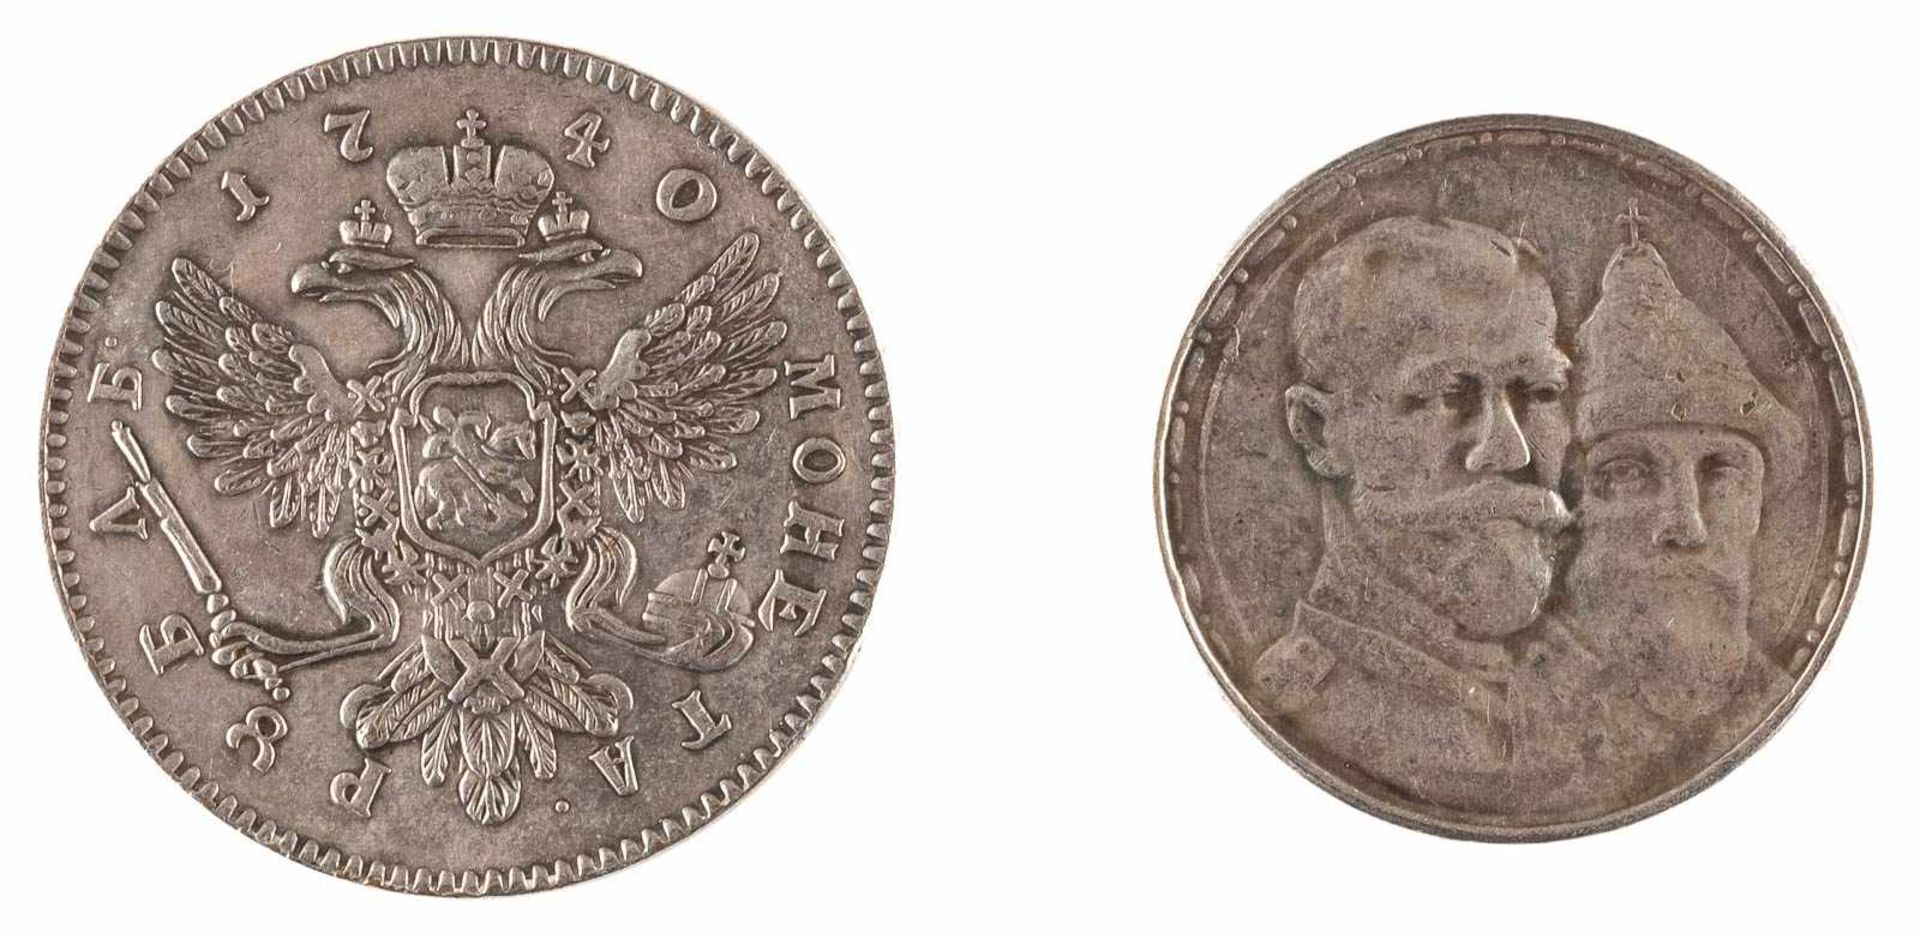 ZWEI RUBEL-MÜNZEN Russland, 1913 / Replik des Rubels unter Iwan VI. Silber. D. 40 mm / 34 mm, 40 g.